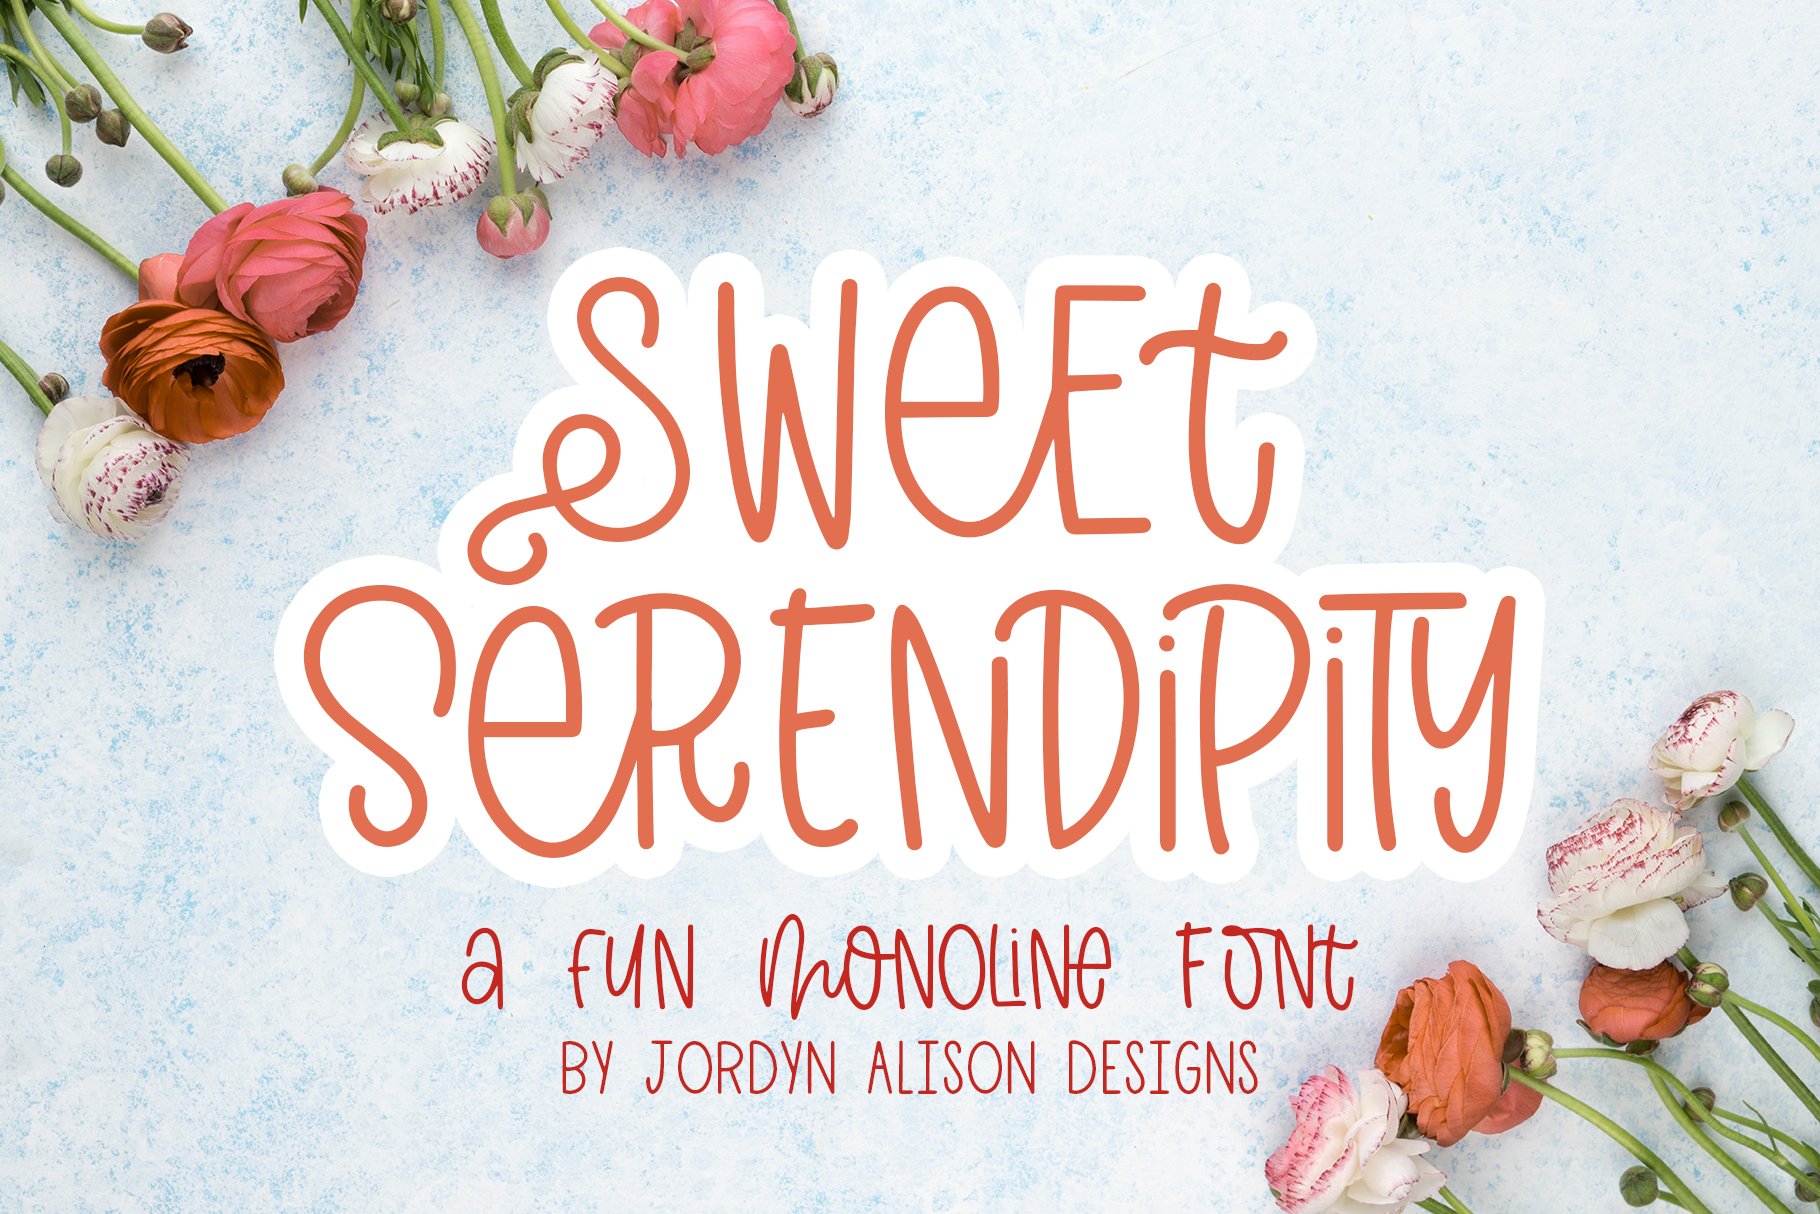 Sweet Serendipity, Bouncy Monoline cover image.